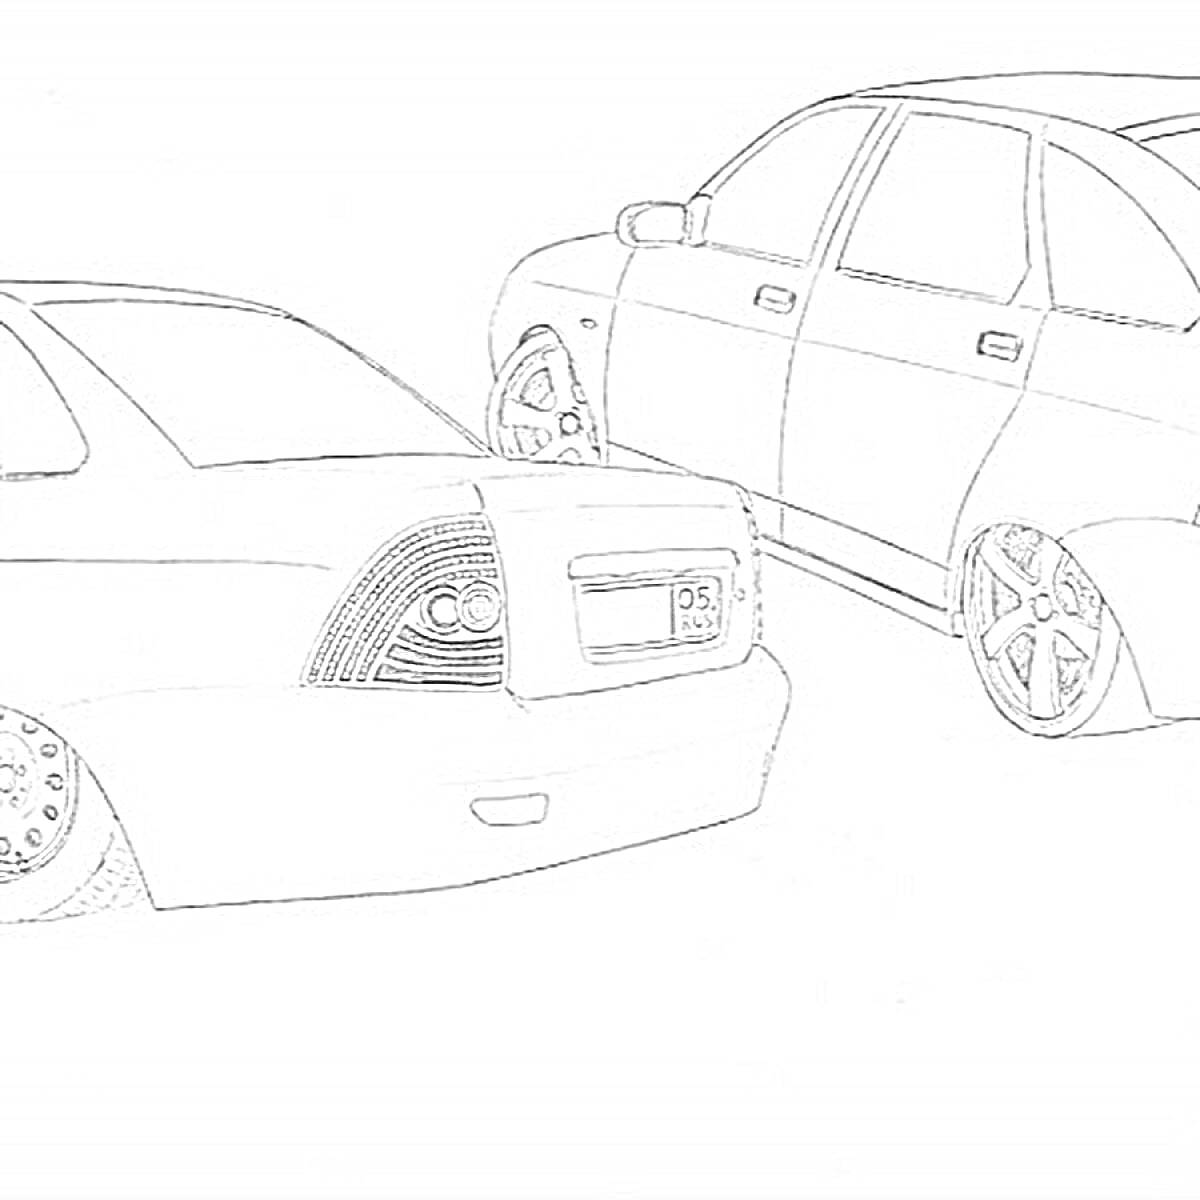 Раскраска Два автомобиля Лада Приора, вид сзади и сбоку, с дисками на колёсах